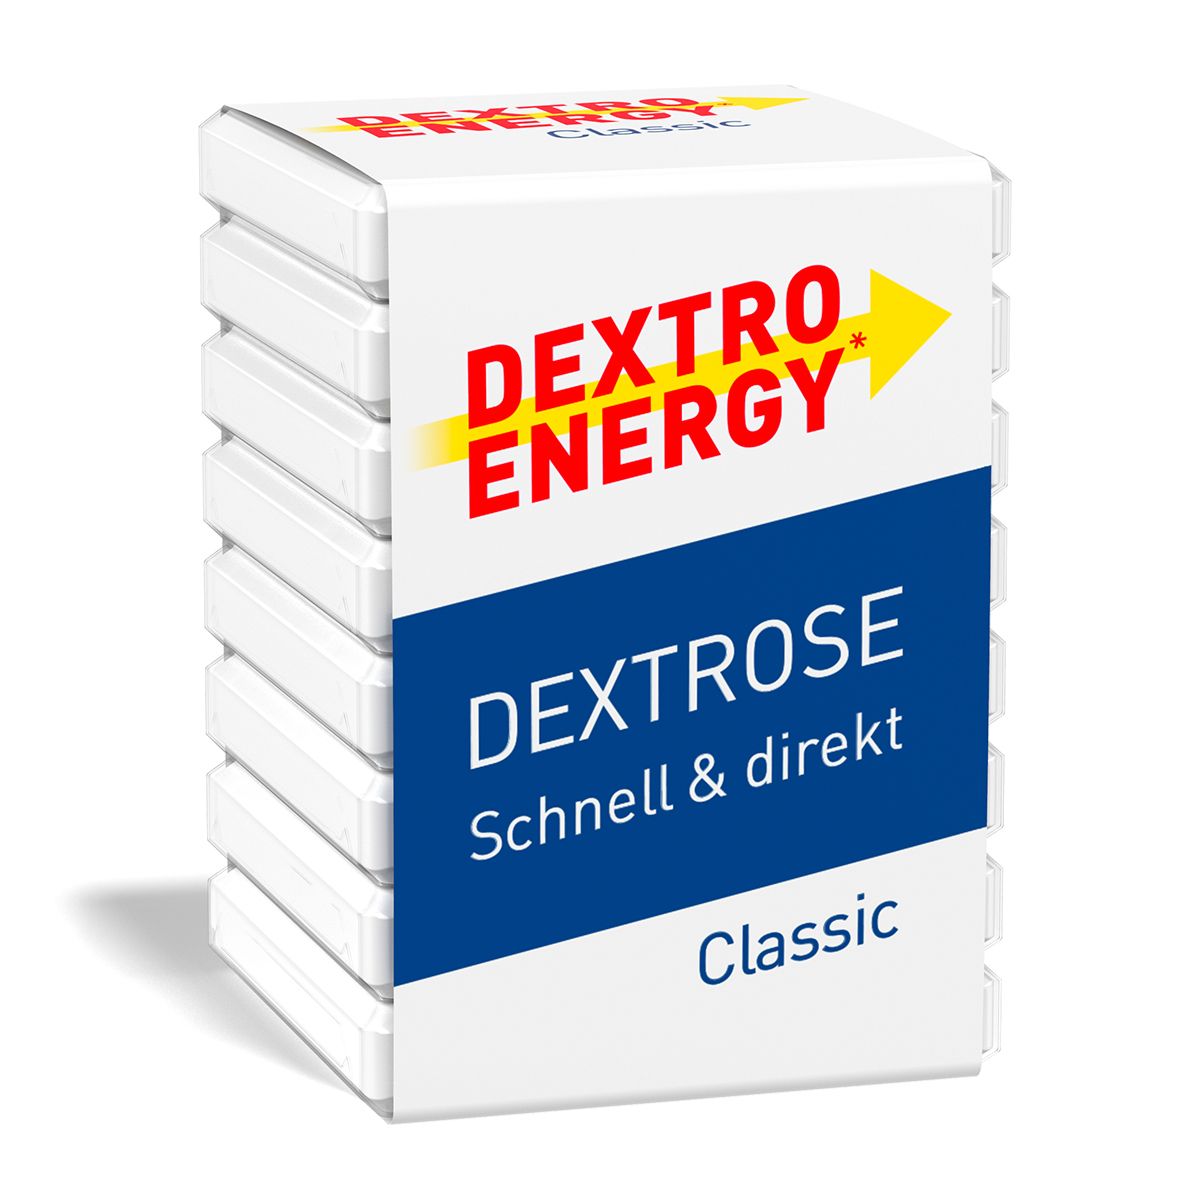 Image of Dextro Energy classic Würfel